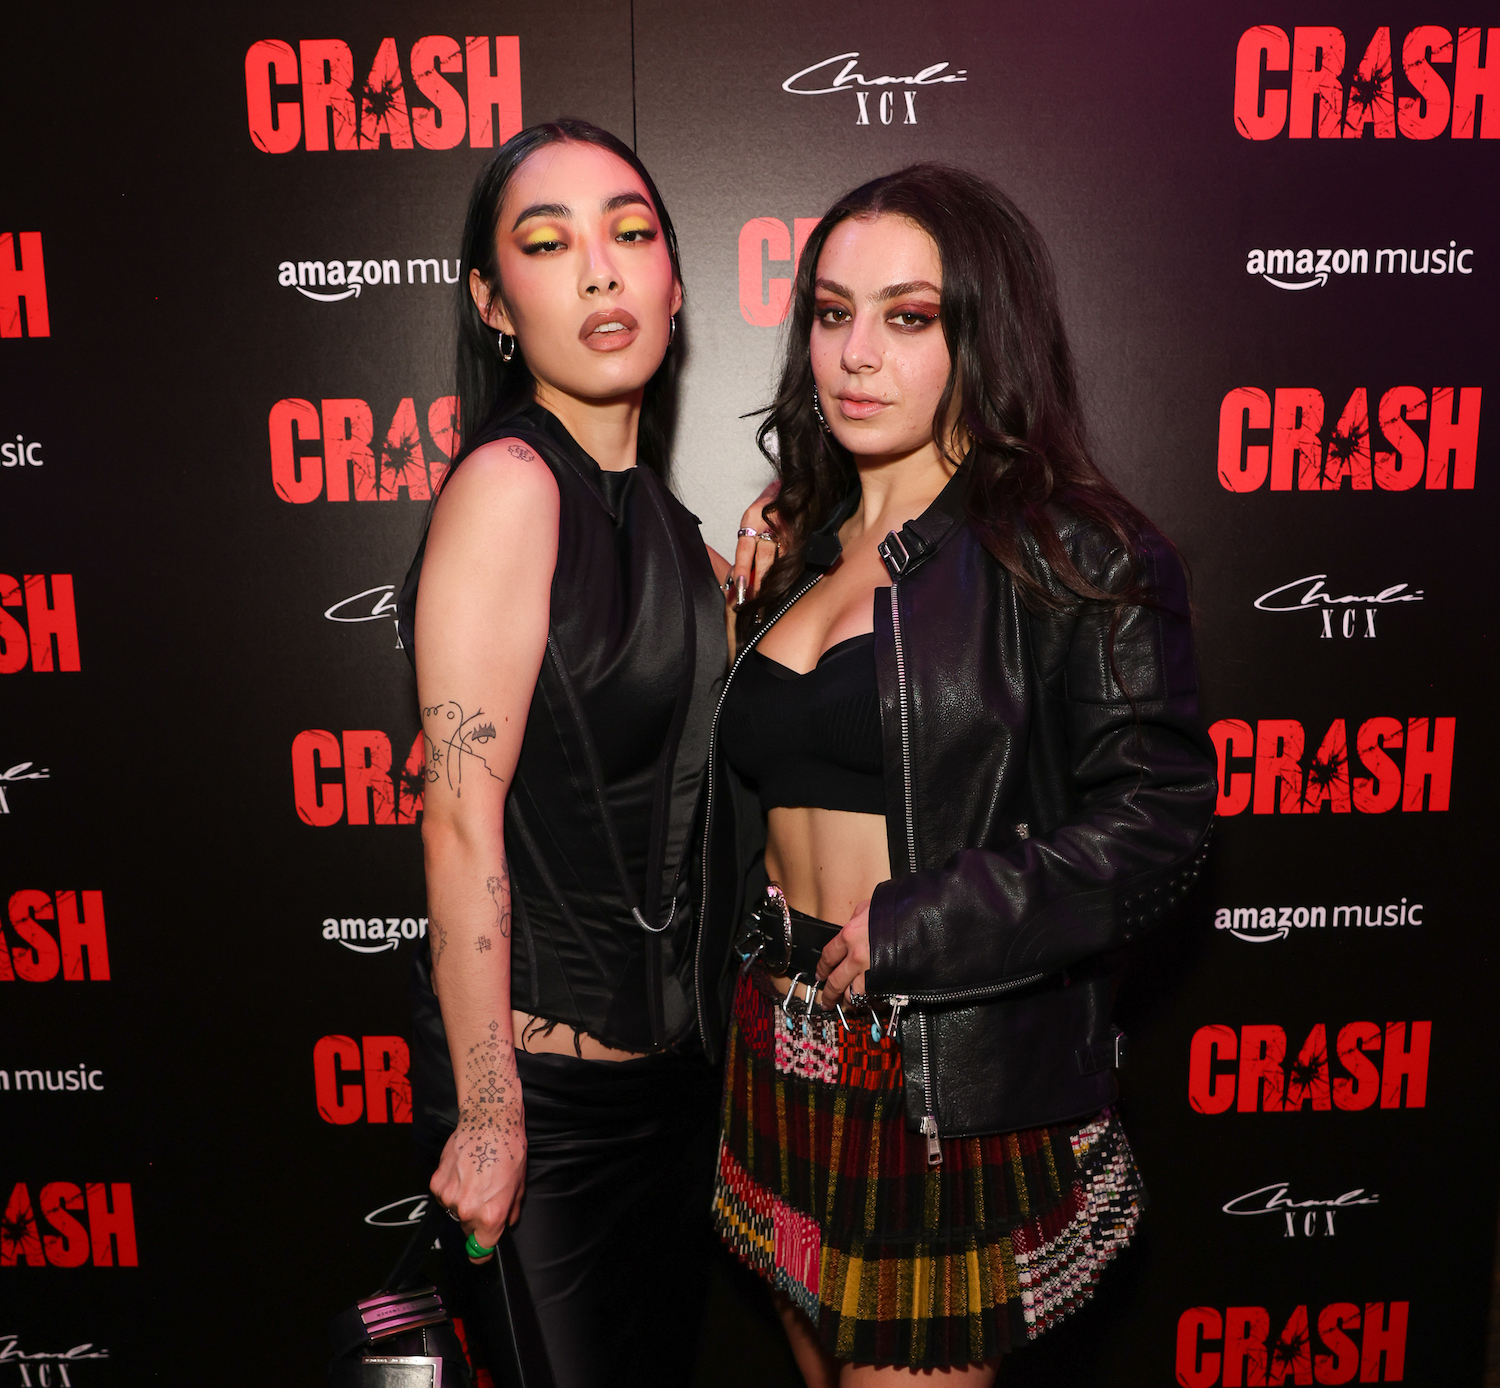 Rina Sawayama and Charli XCX attend Charli XCX 'Crash' album launch party with Amazon Music